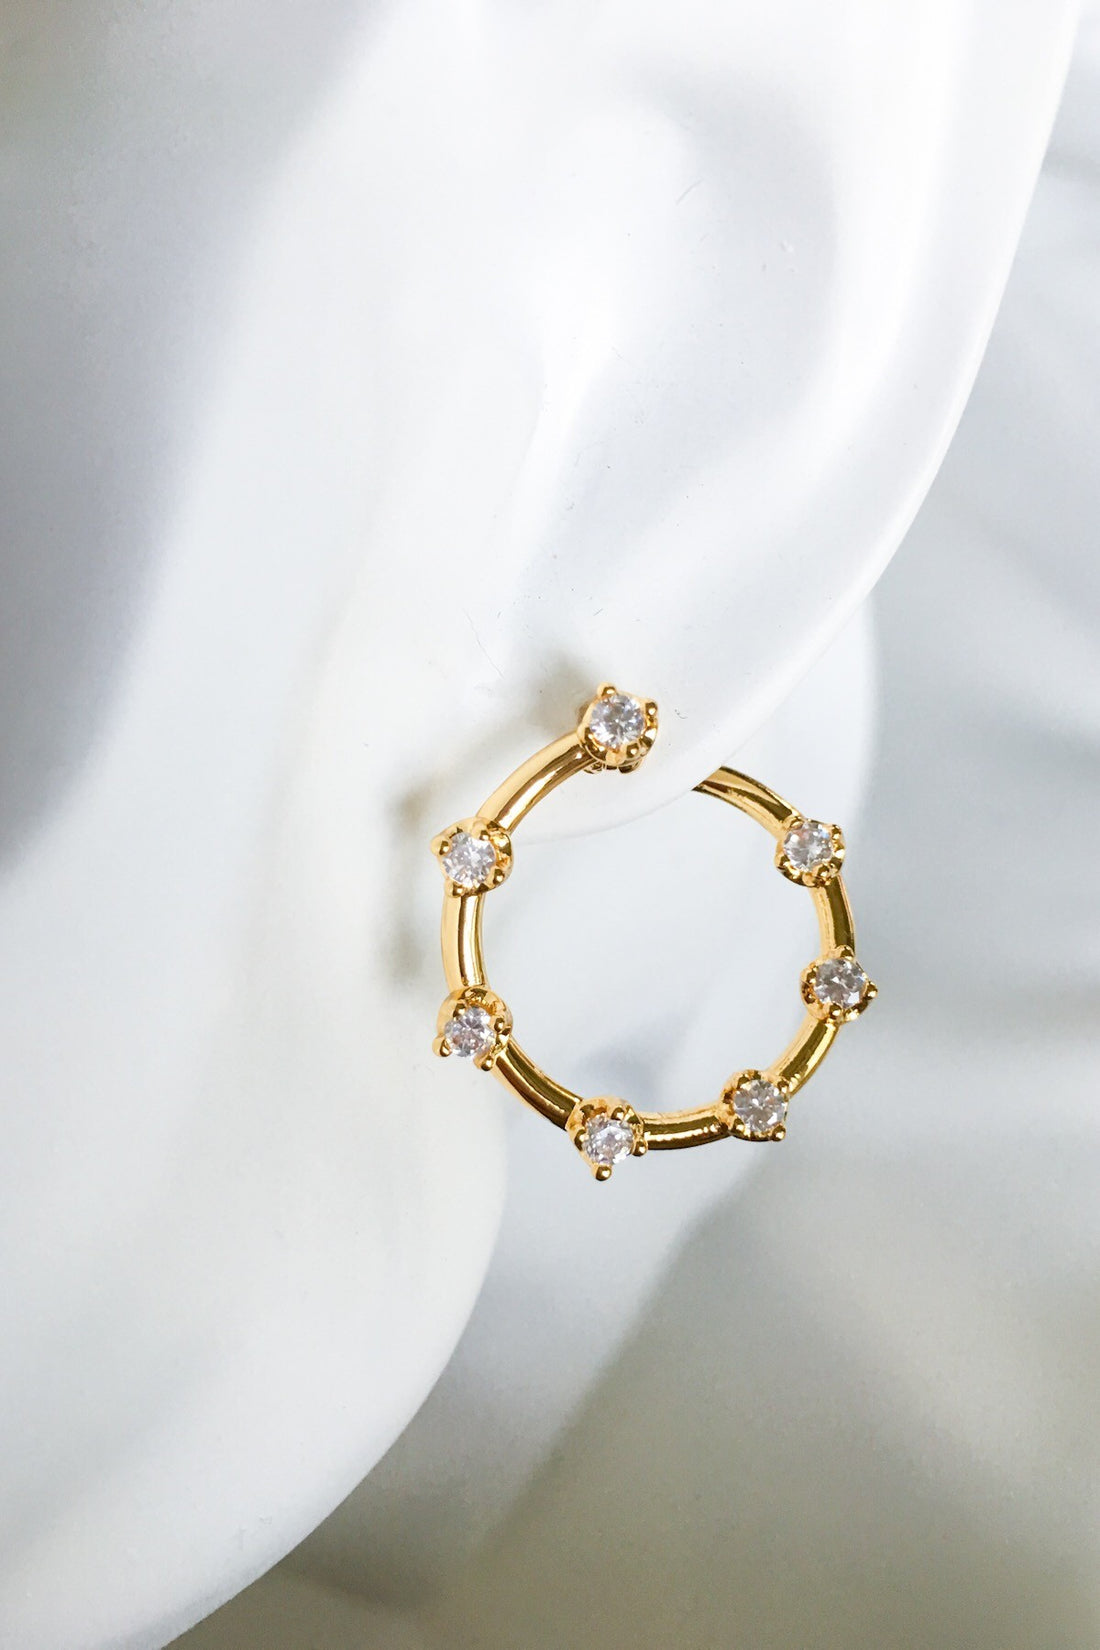 SKYE San Francisco SF California shop ethical sustainable modern minimalist quality women jewelry Leonila 18K Gold Earrings circular diamond 3